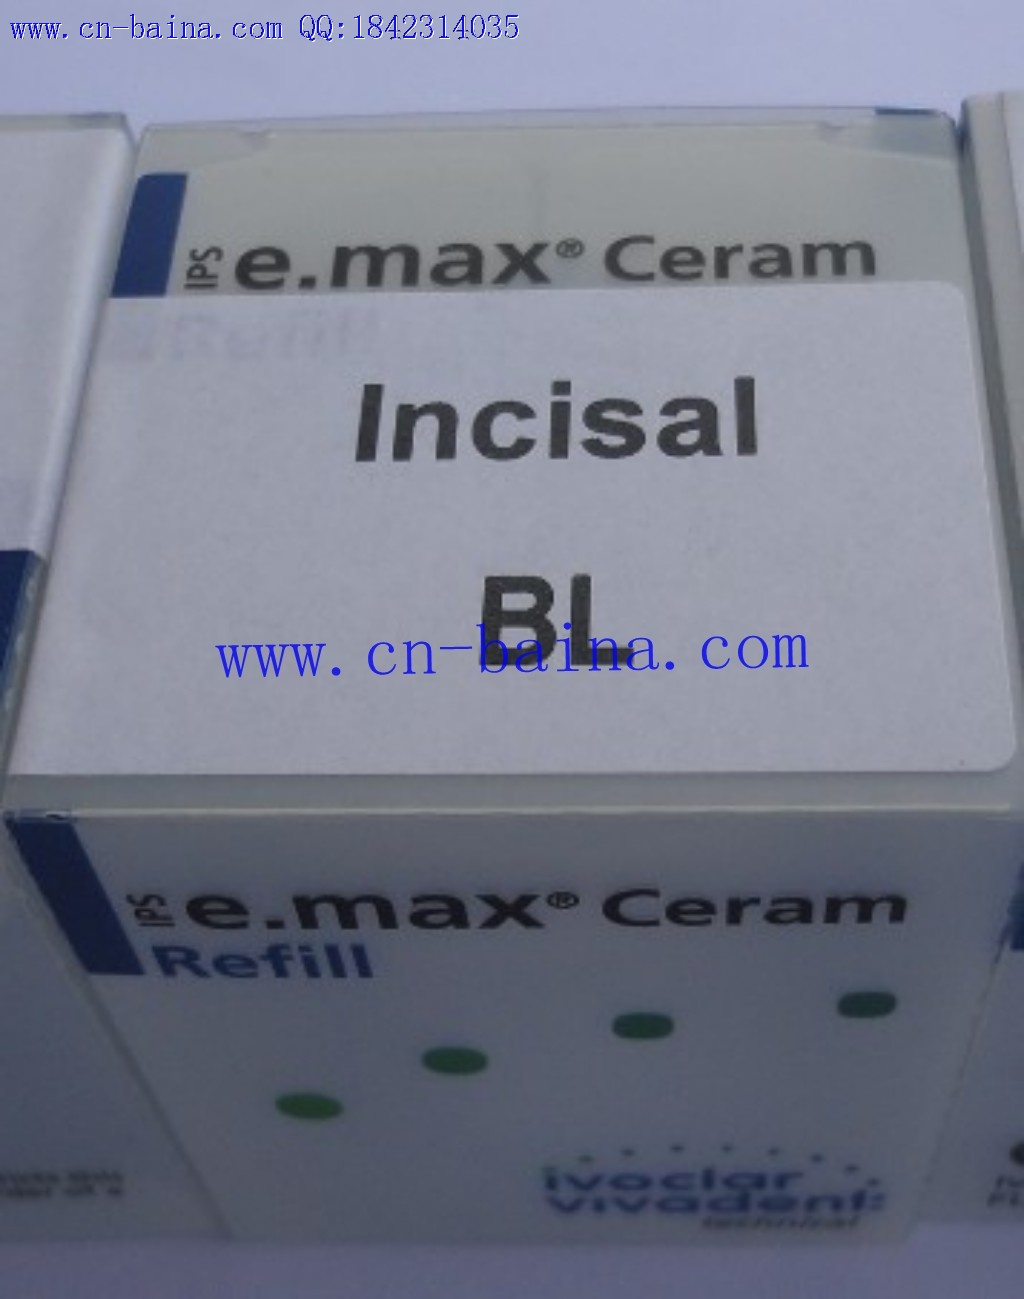 e.max bleaching BL incisal 20 gram